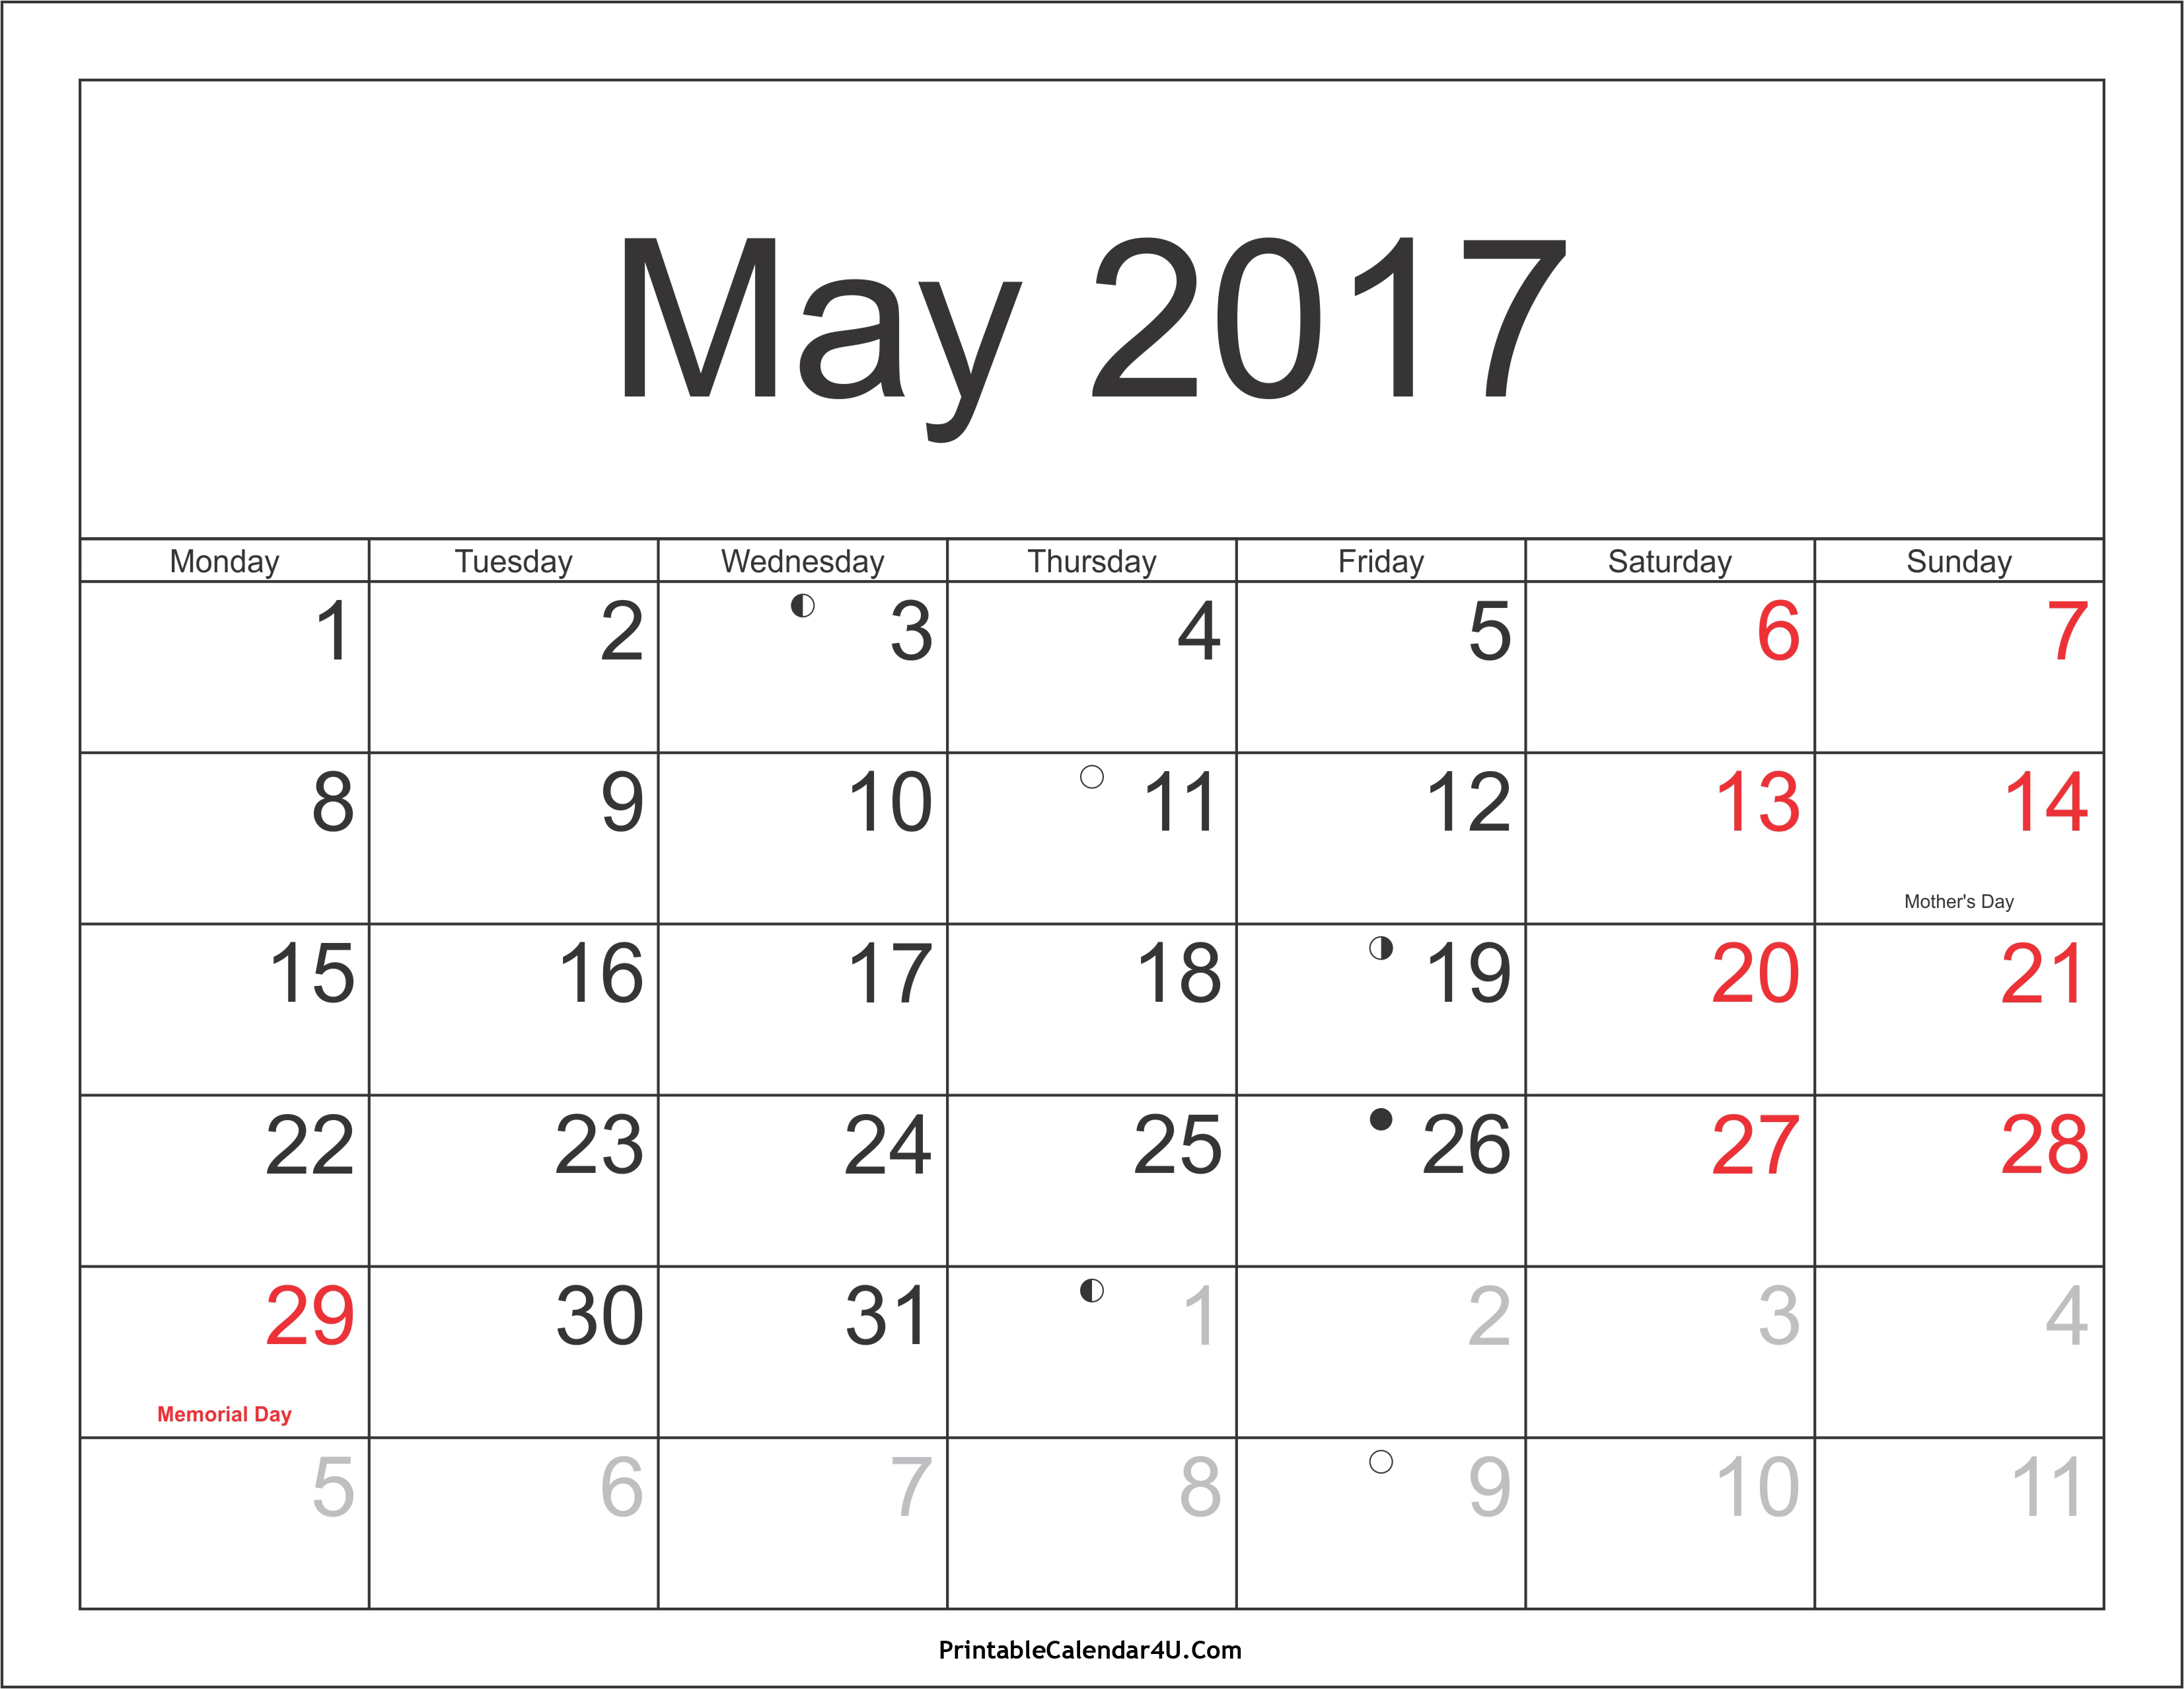 May 2017 Calendar Printable with Holidays PDF and 